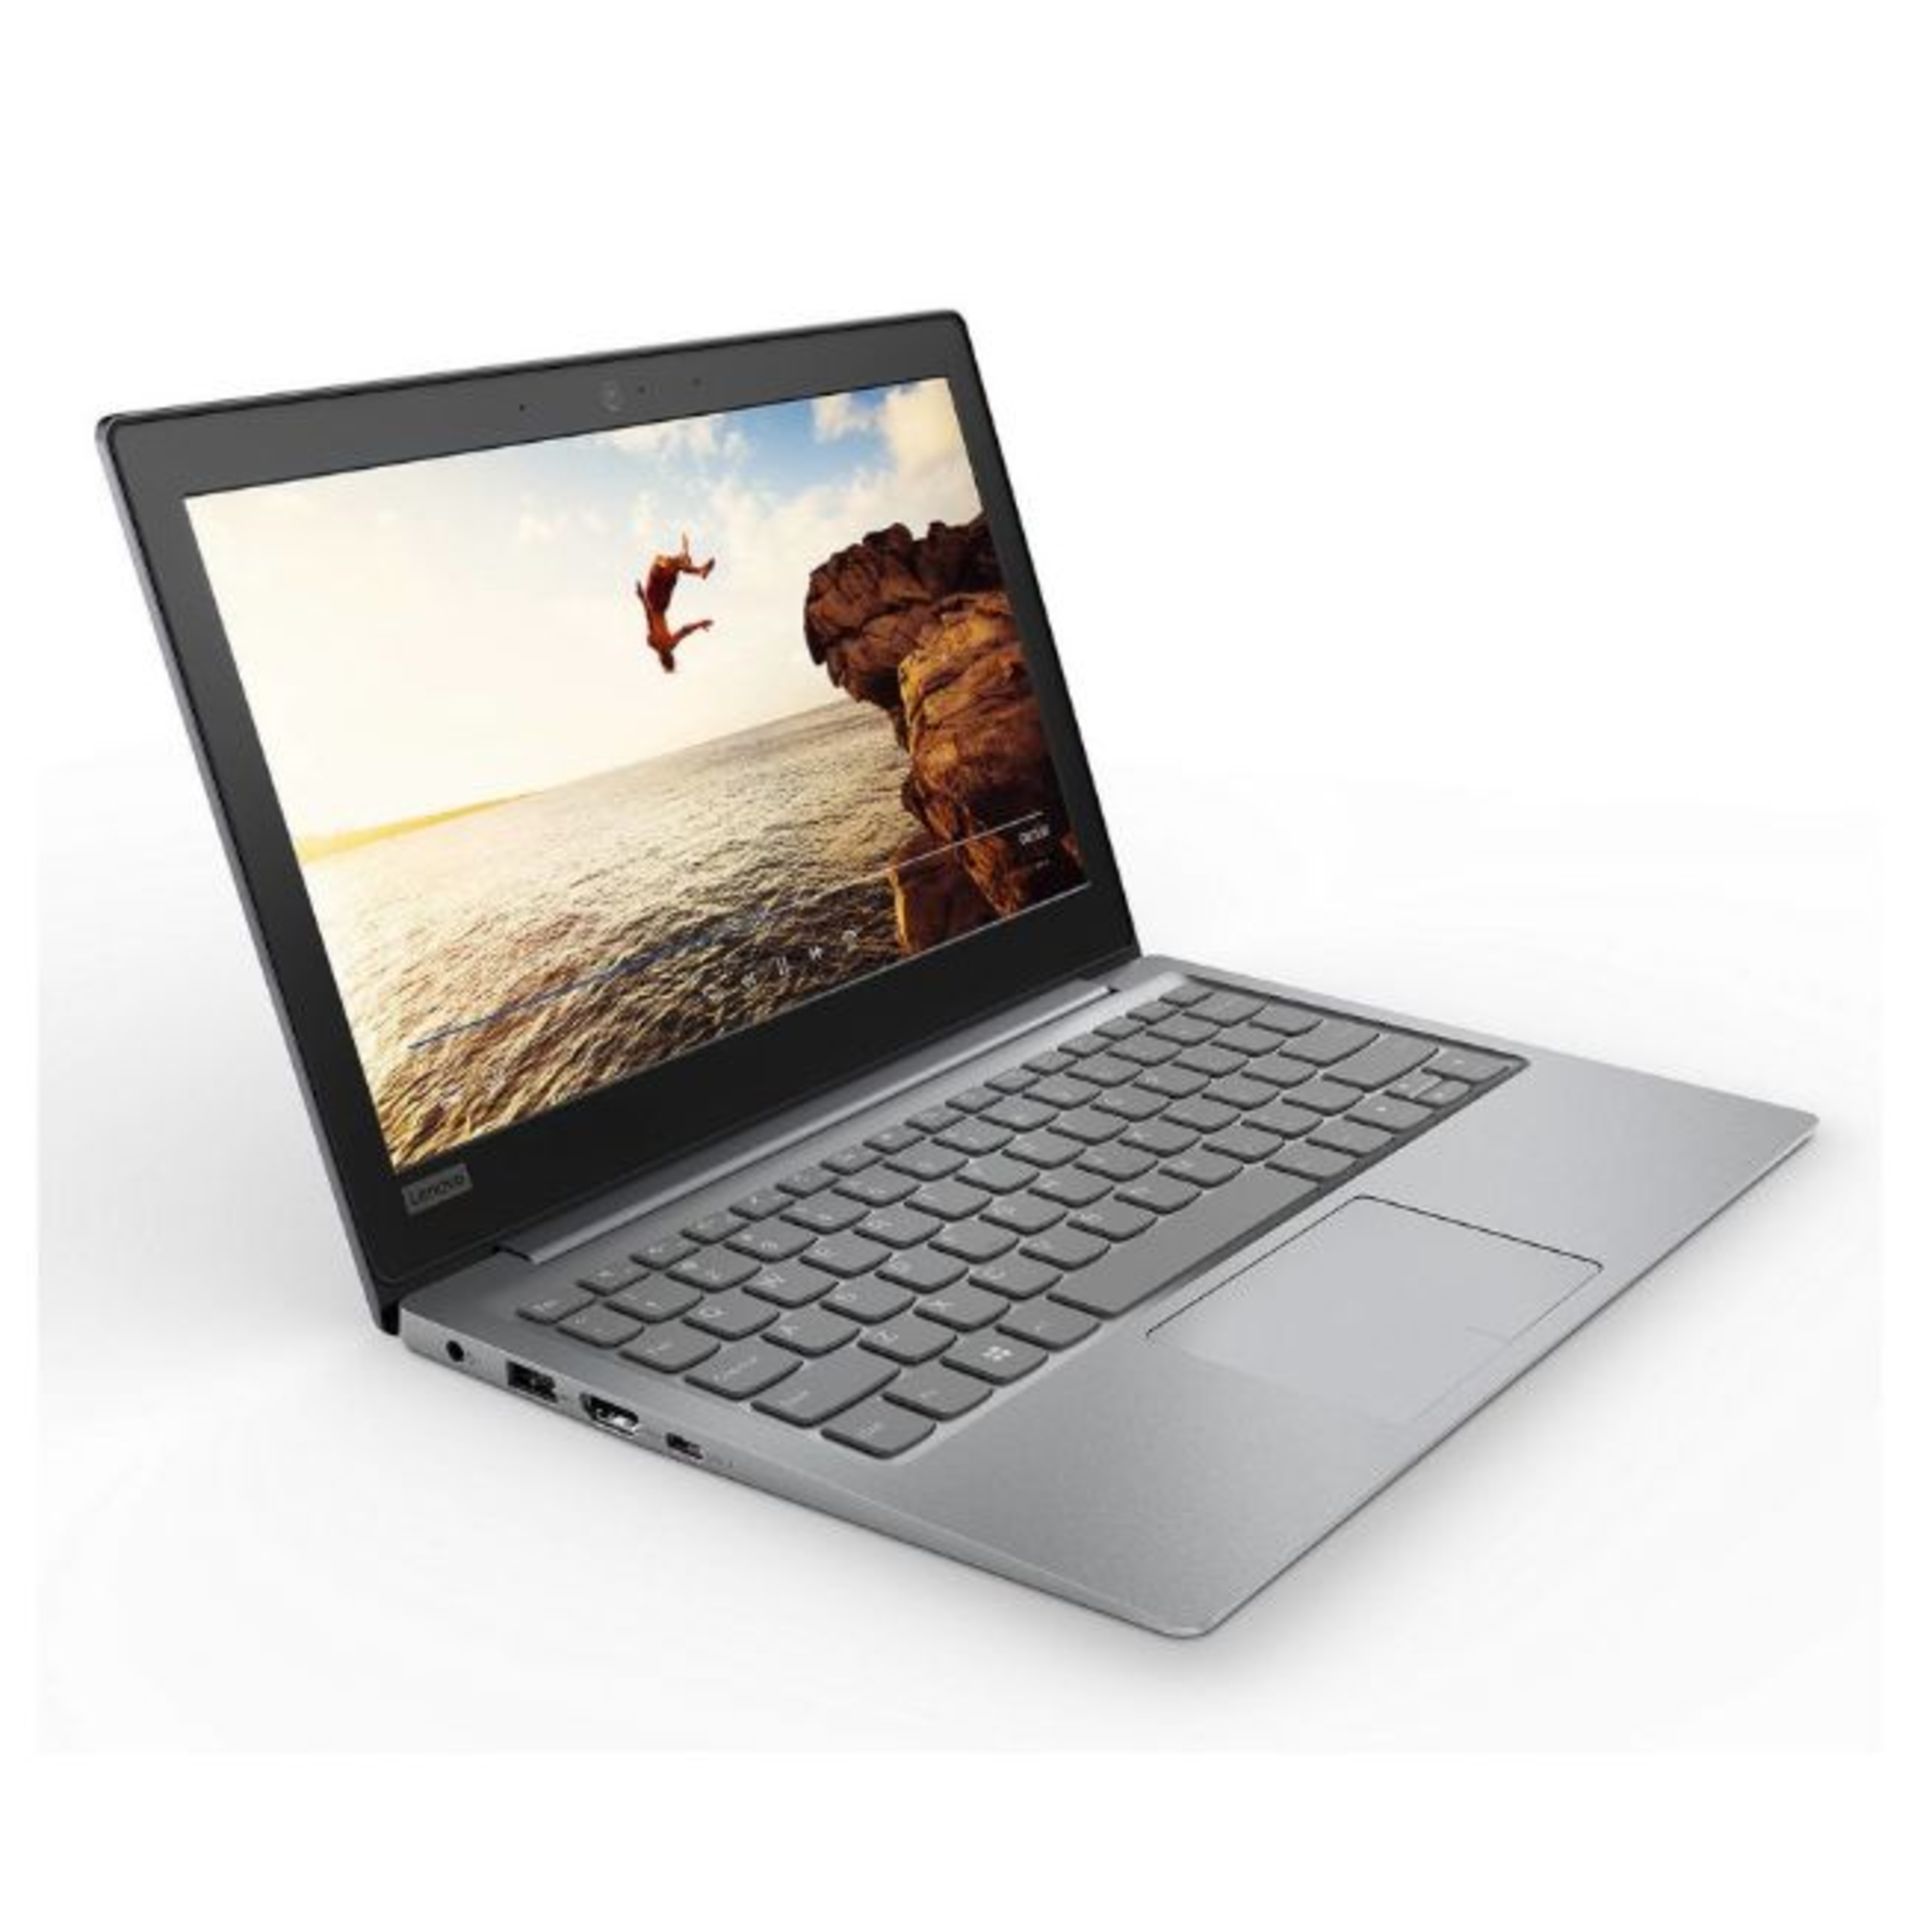 (7) 1 x Grade B - Lenovo IdeaPad 120S 81A4005PUK Laptop, Intel Celeron N3350, 4GB, 32GB eMMC 11... - Image 3 of 3